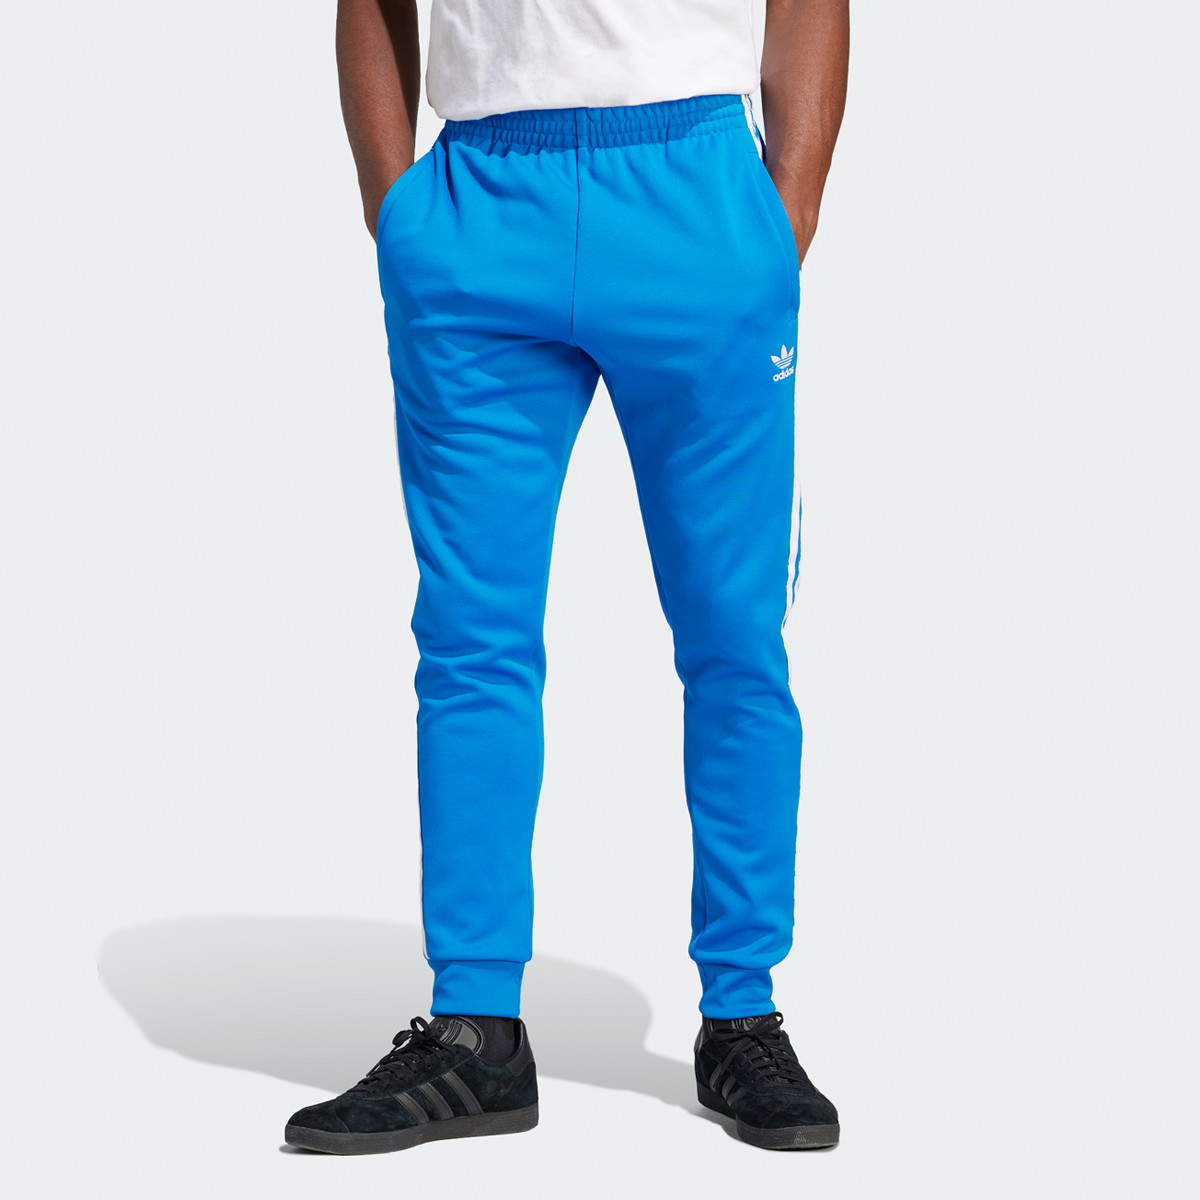 Pantalon de Survêtement  adicolor Superstar, adidas Originals, Apparel, bluebird/white, taille: XL